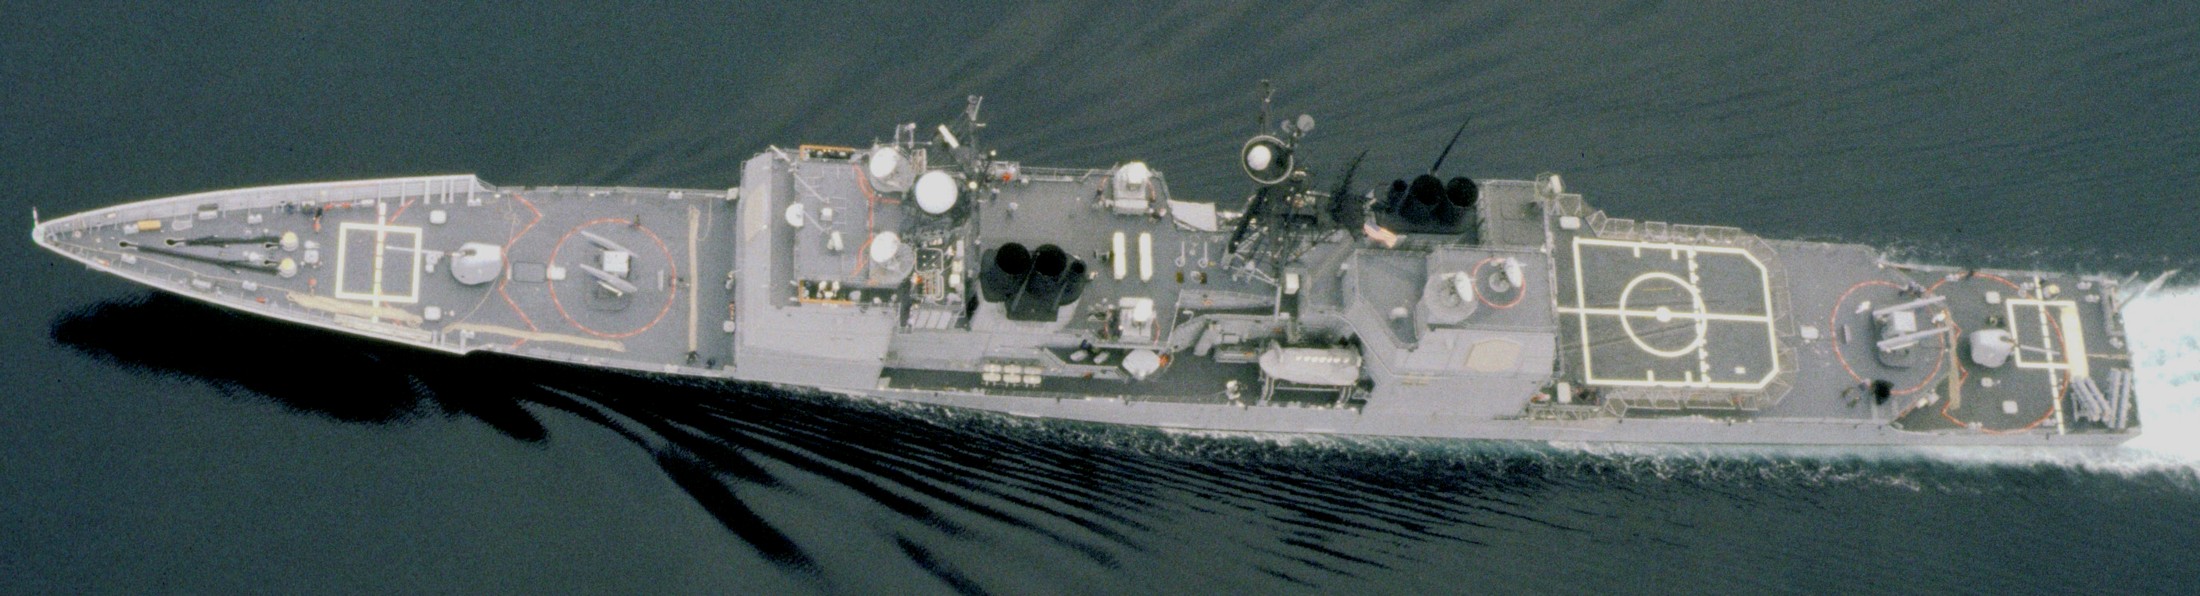 cg-49 uss vincennes ticonderoga class guided missile cruiser aegis us navy 60